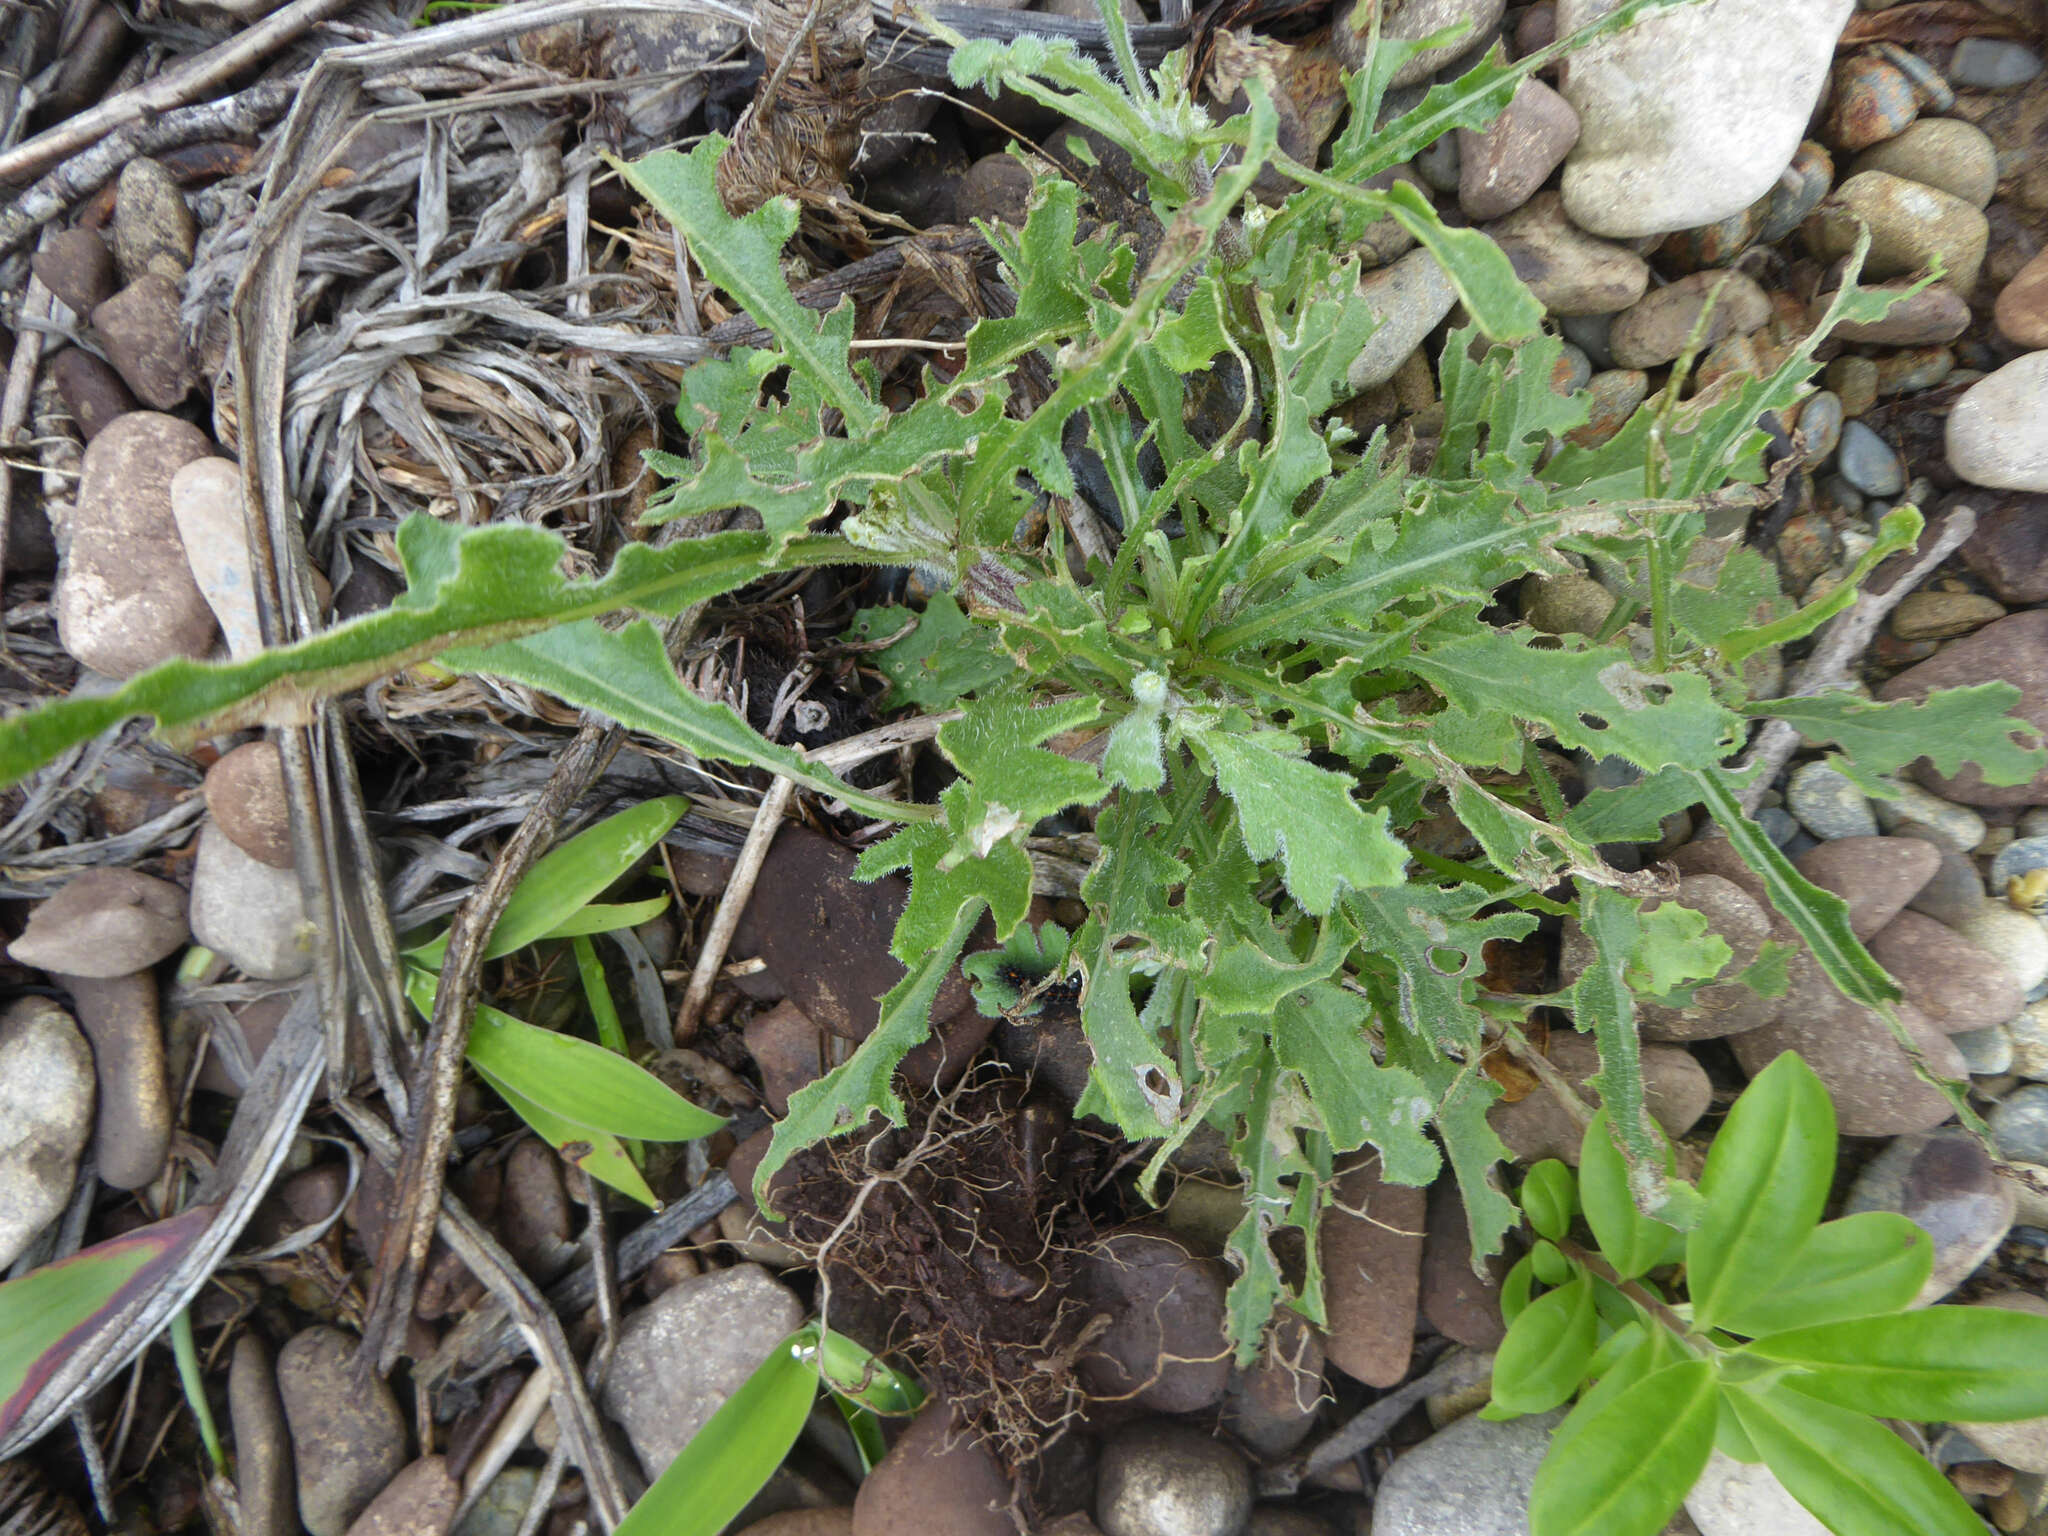 Sivun Senecio glomeratus subsp. glomeratus kuva